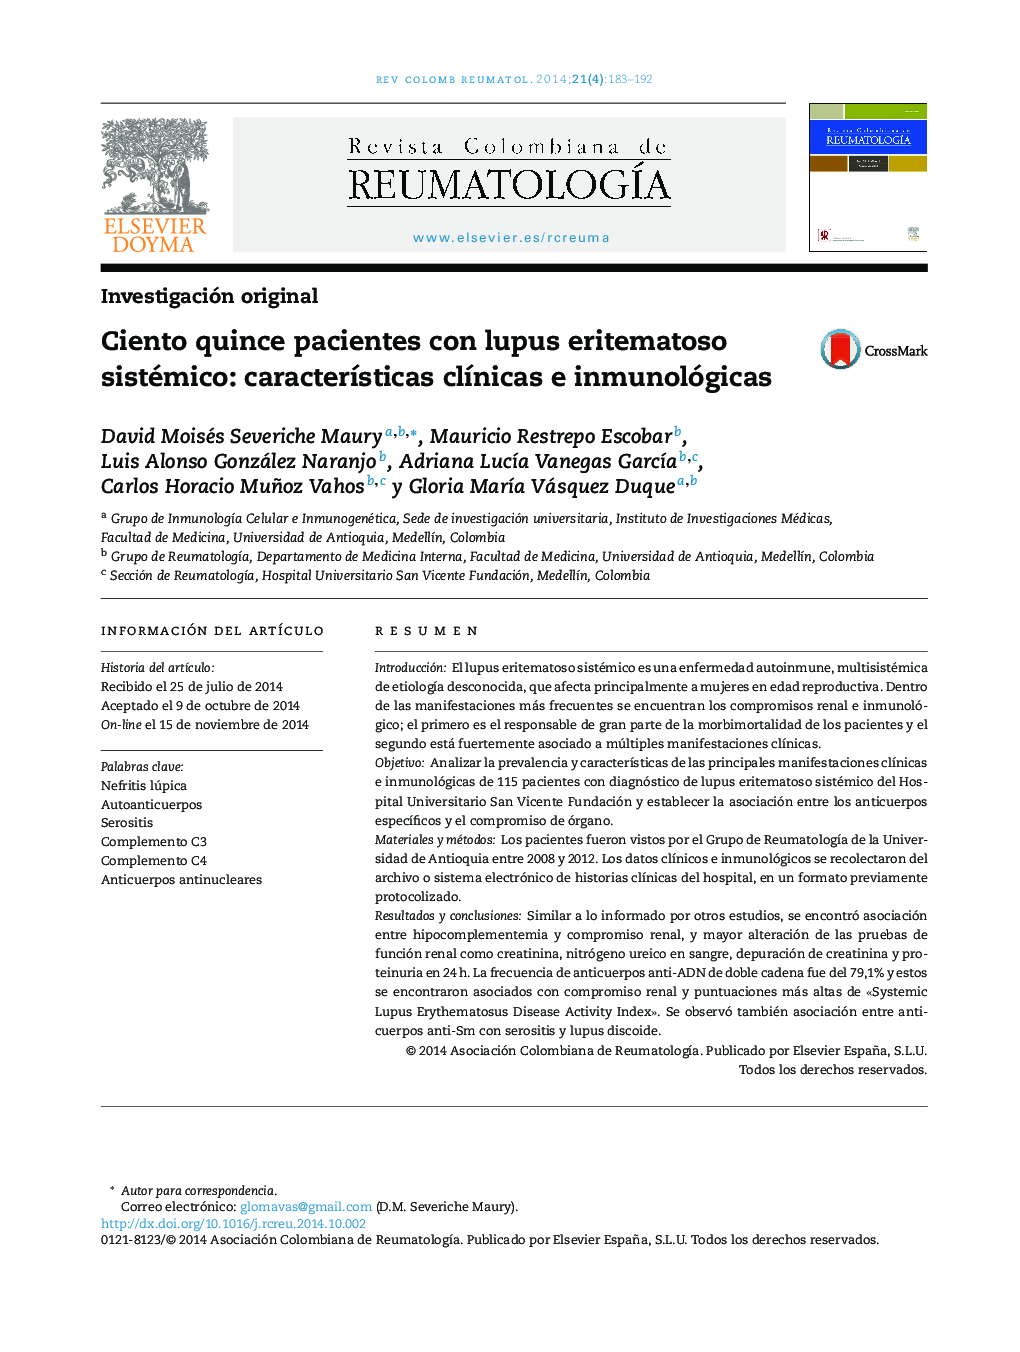 Ciento quince pacientes con lupus eritematoso sistémico: caracterÃ­sticas clÃ­nicas e inmunológicas